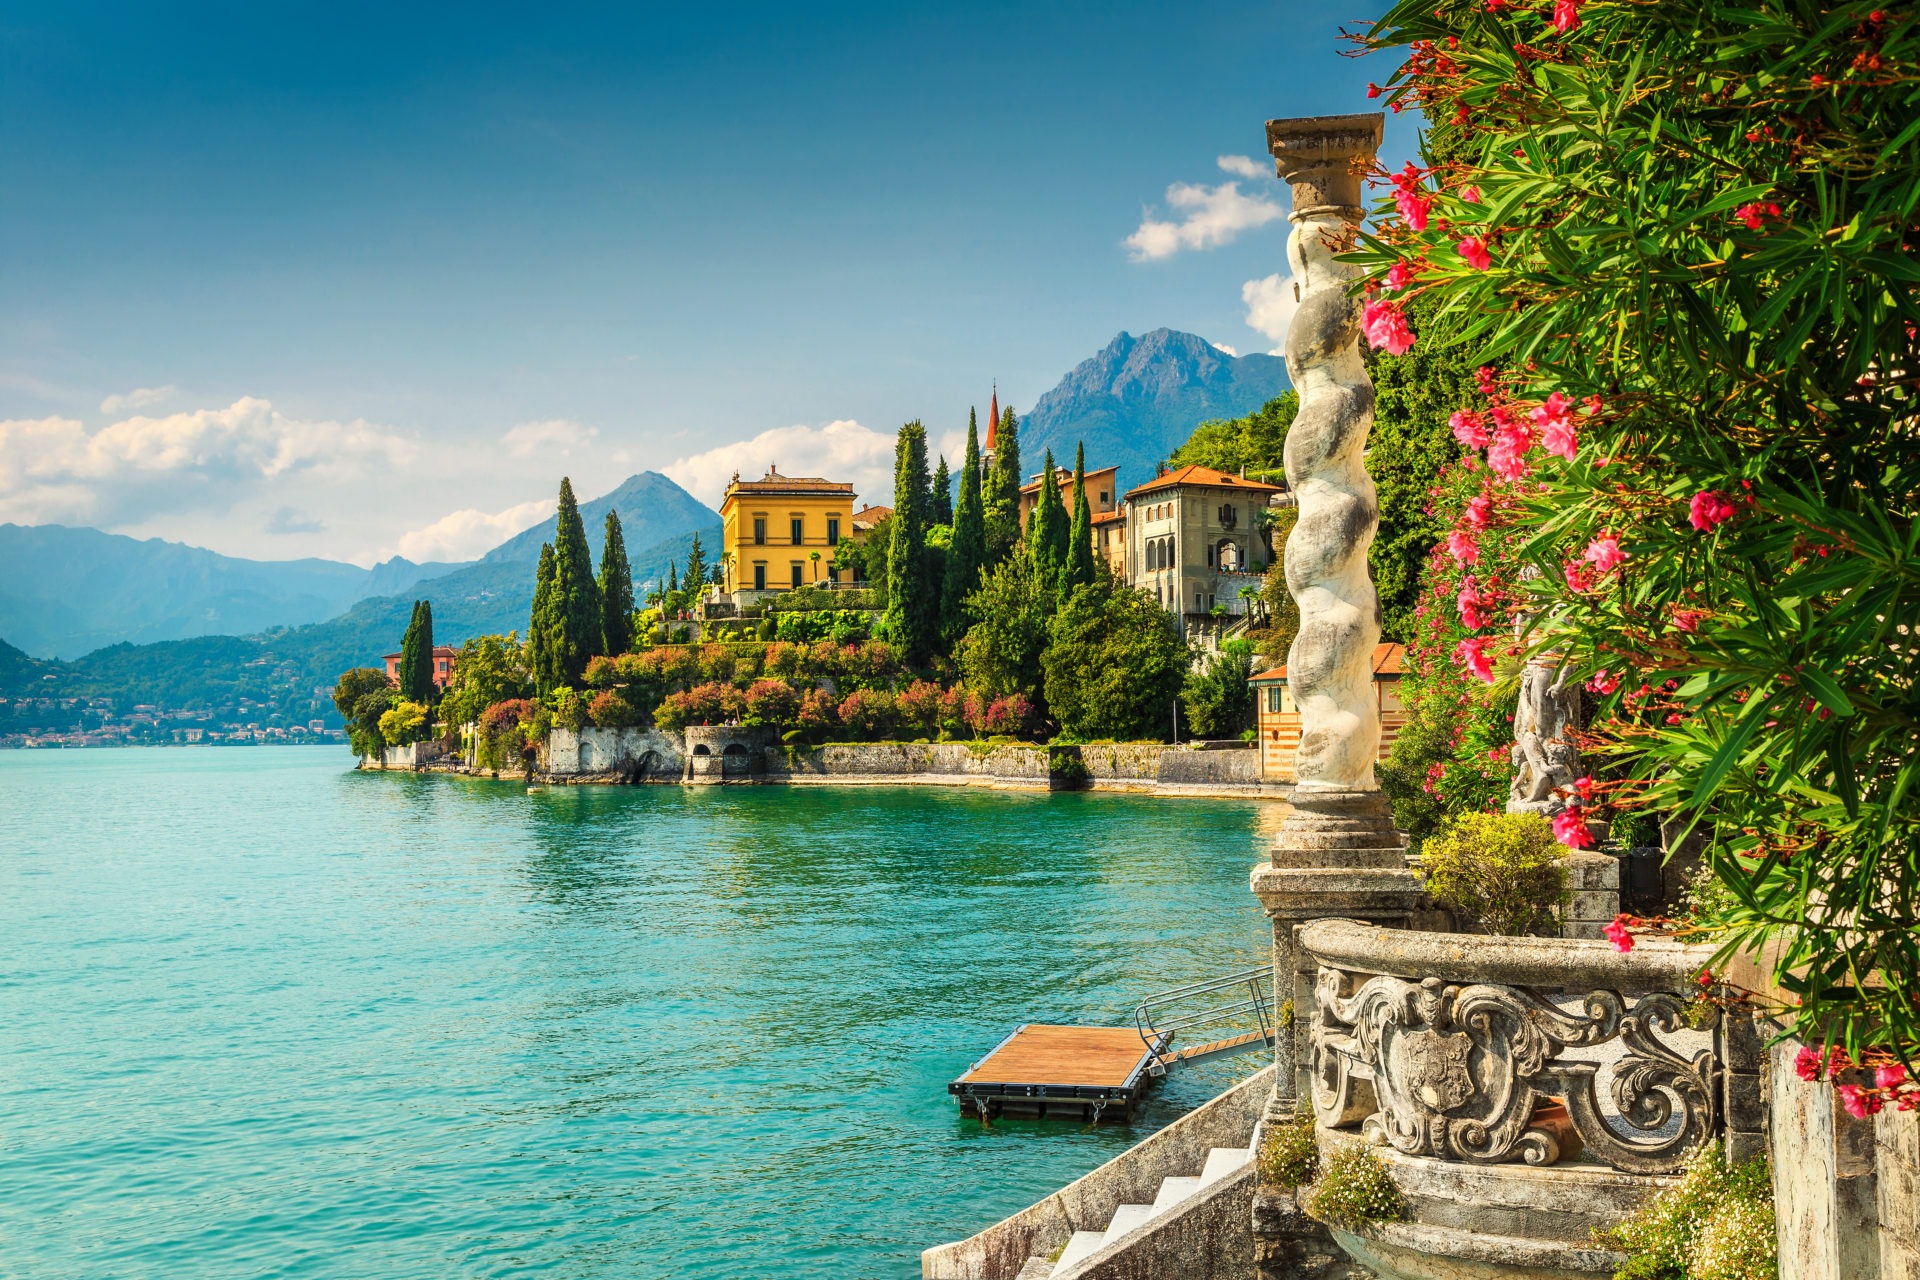 Discover 6 pretty villages on Lake Como’s shores